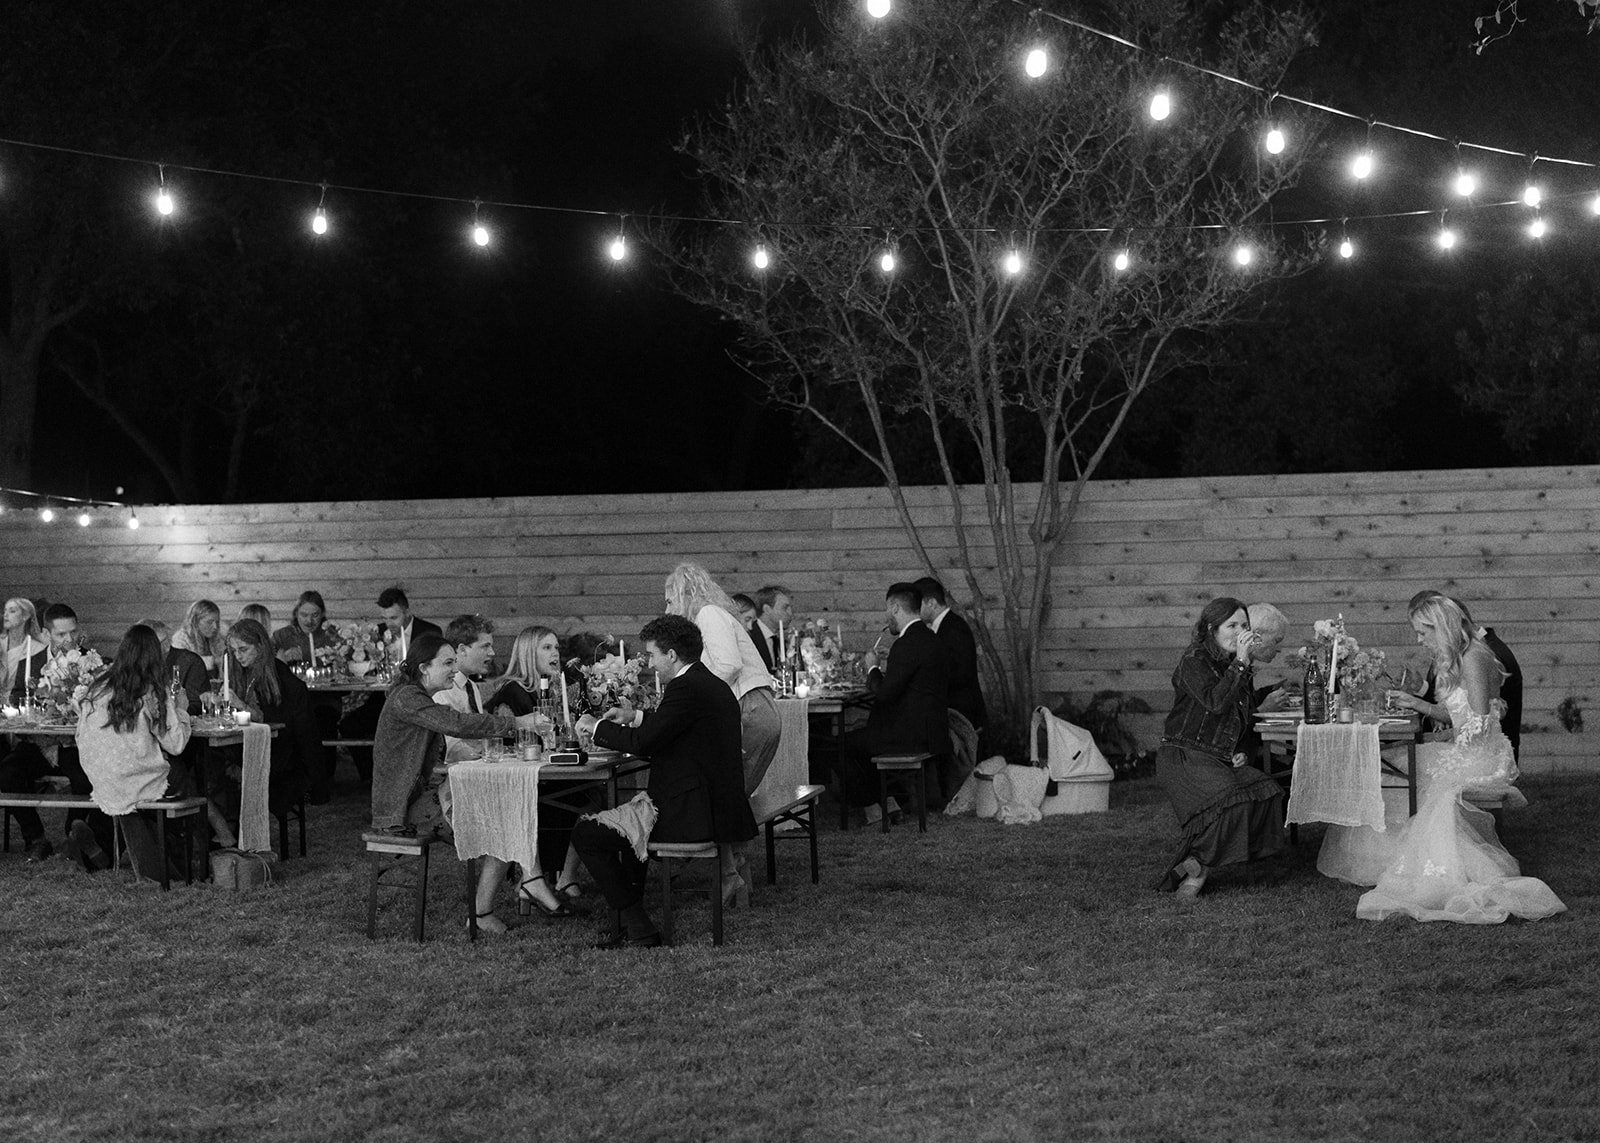 Best-Austin-Wedding-Photographers-Elopement-Film-35mm-Asheville-Santa-Barbara-Backyard-173.jpg